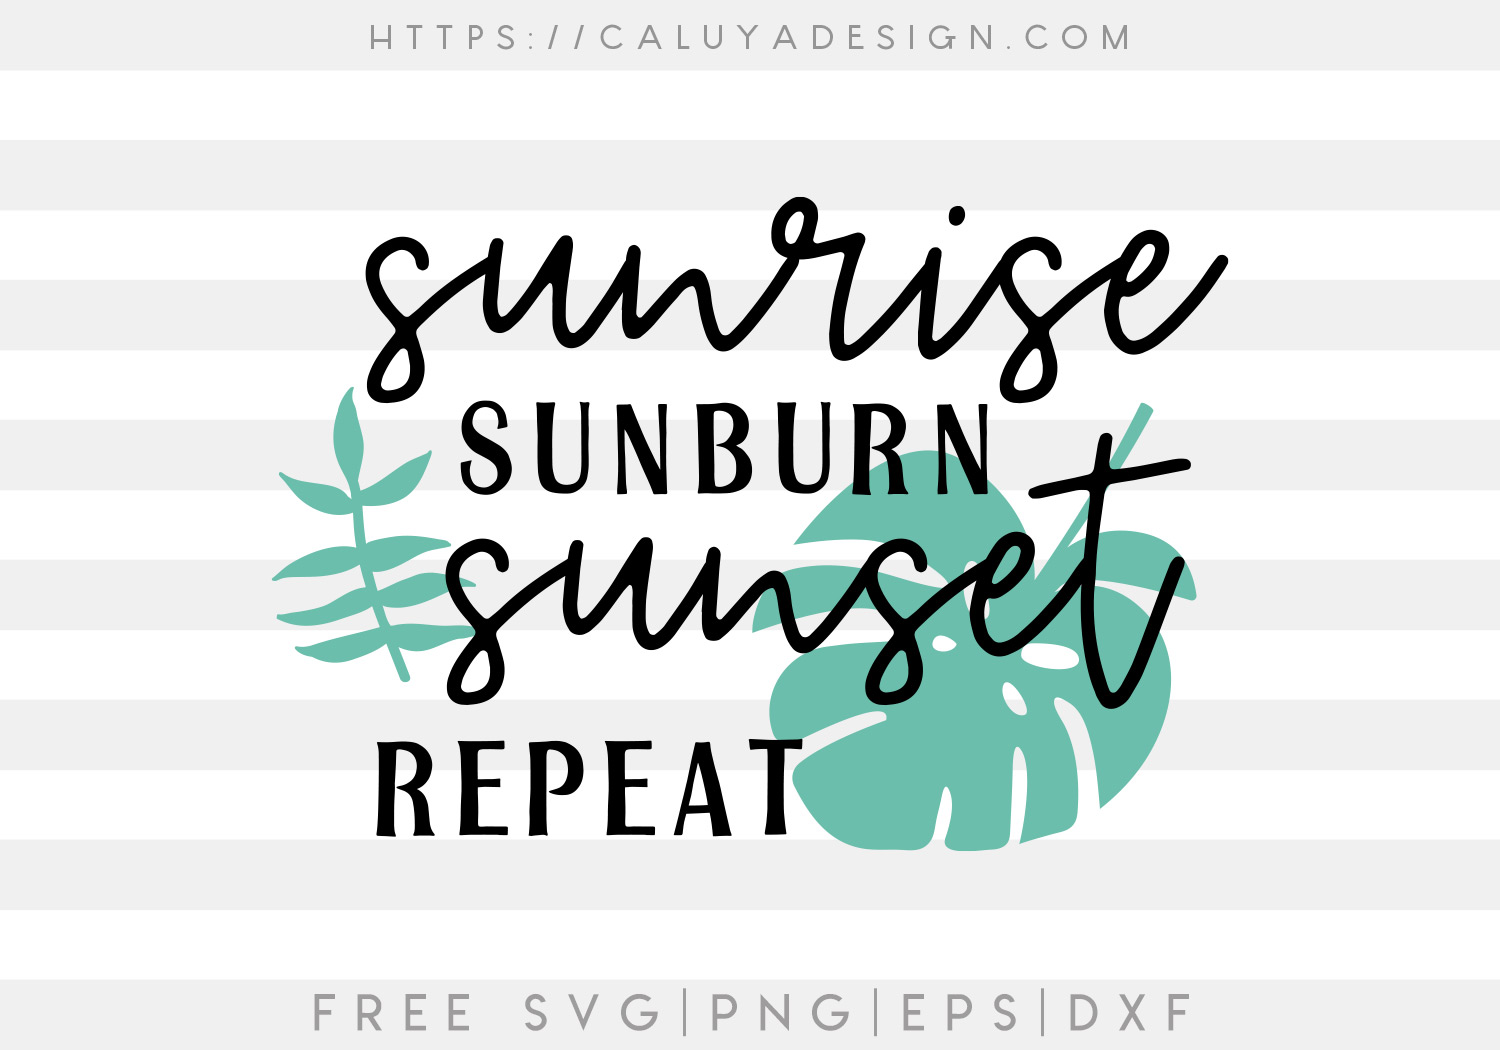 Sunrise Sunburn Sunset Repeat SVG, PNG, EPS & DXF